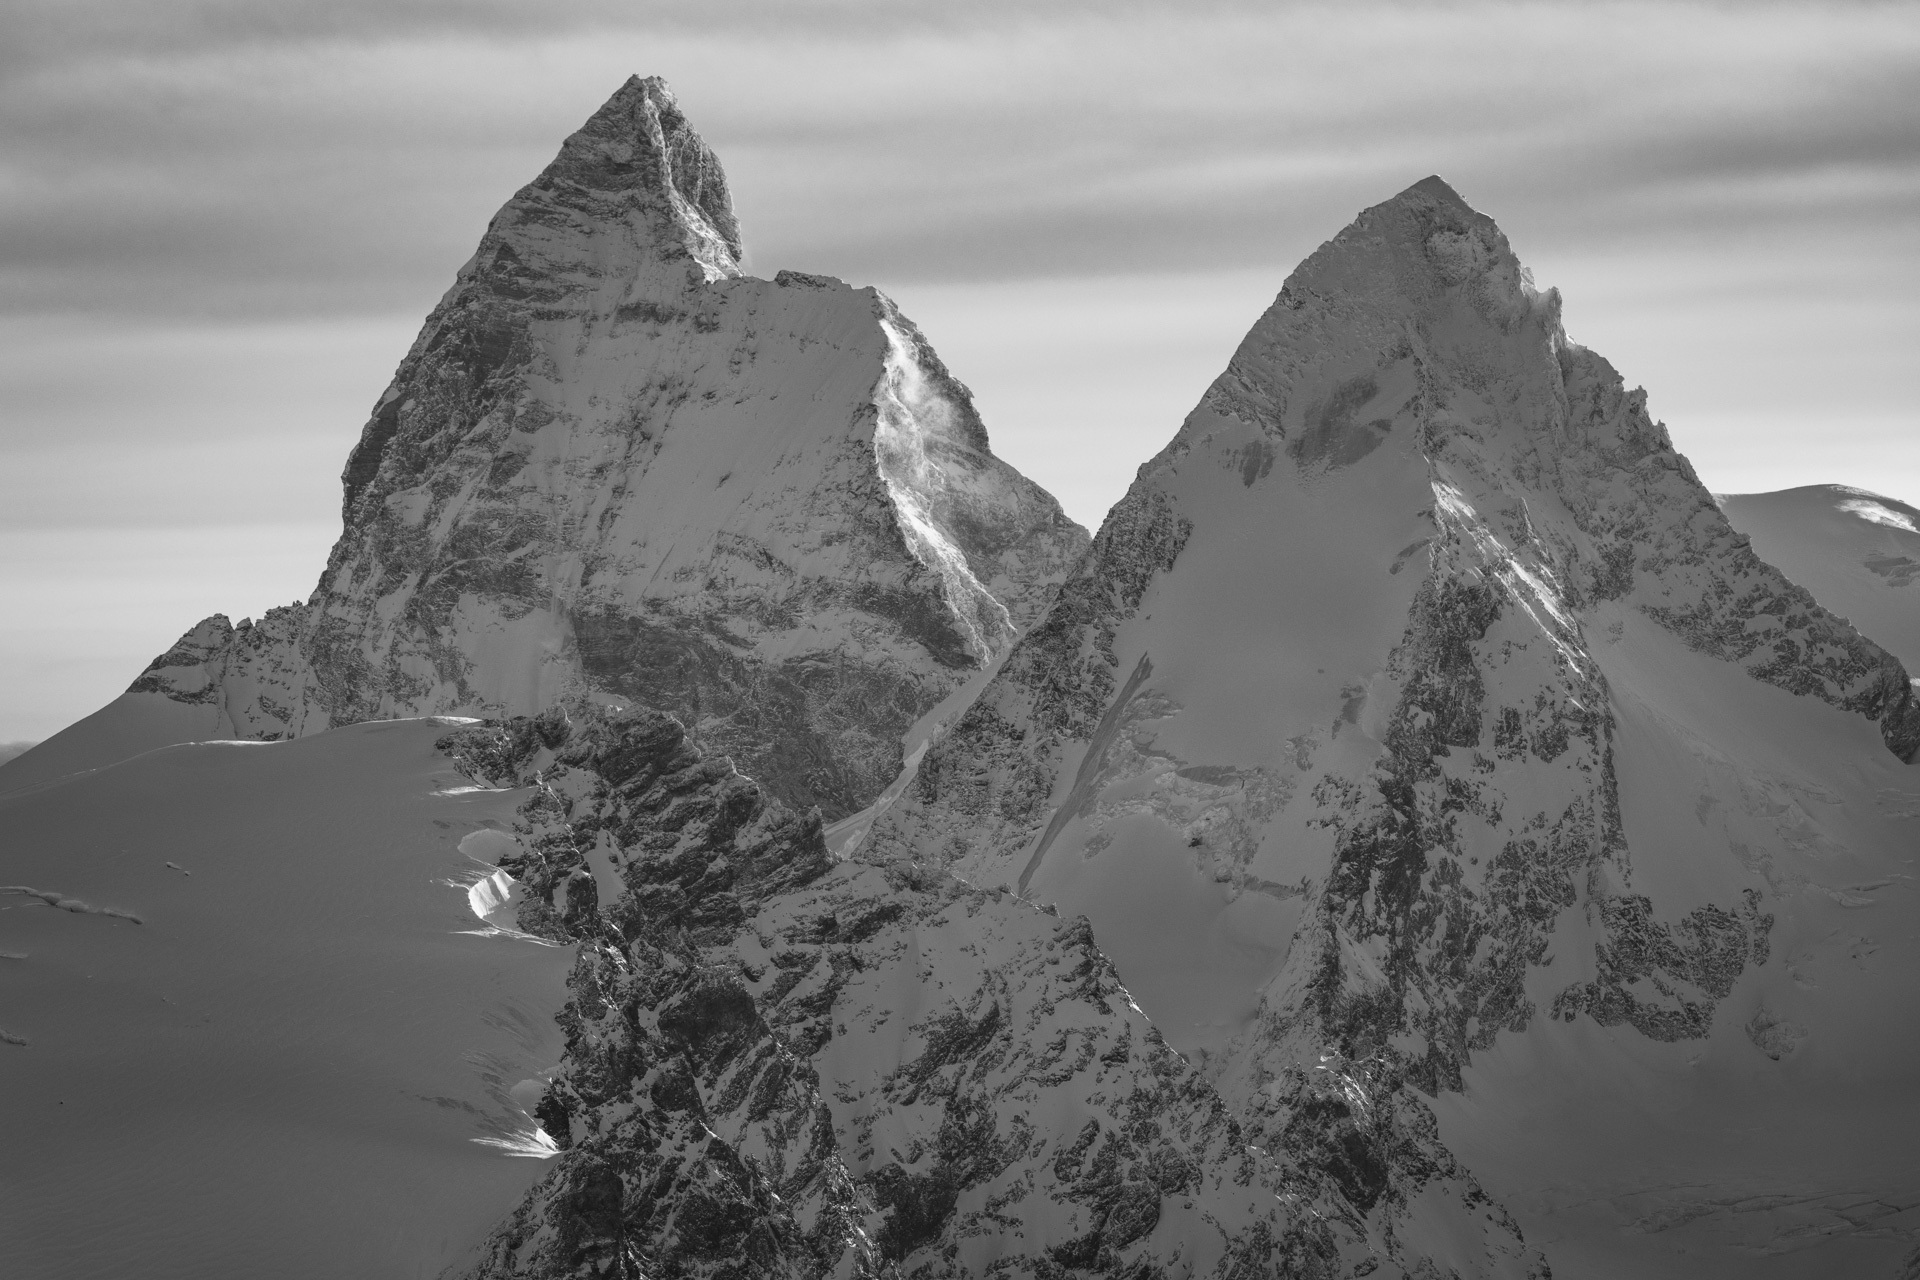 The Matterhorn Zermatt  - Black and white image of a Swiss mountain peak in the Alps